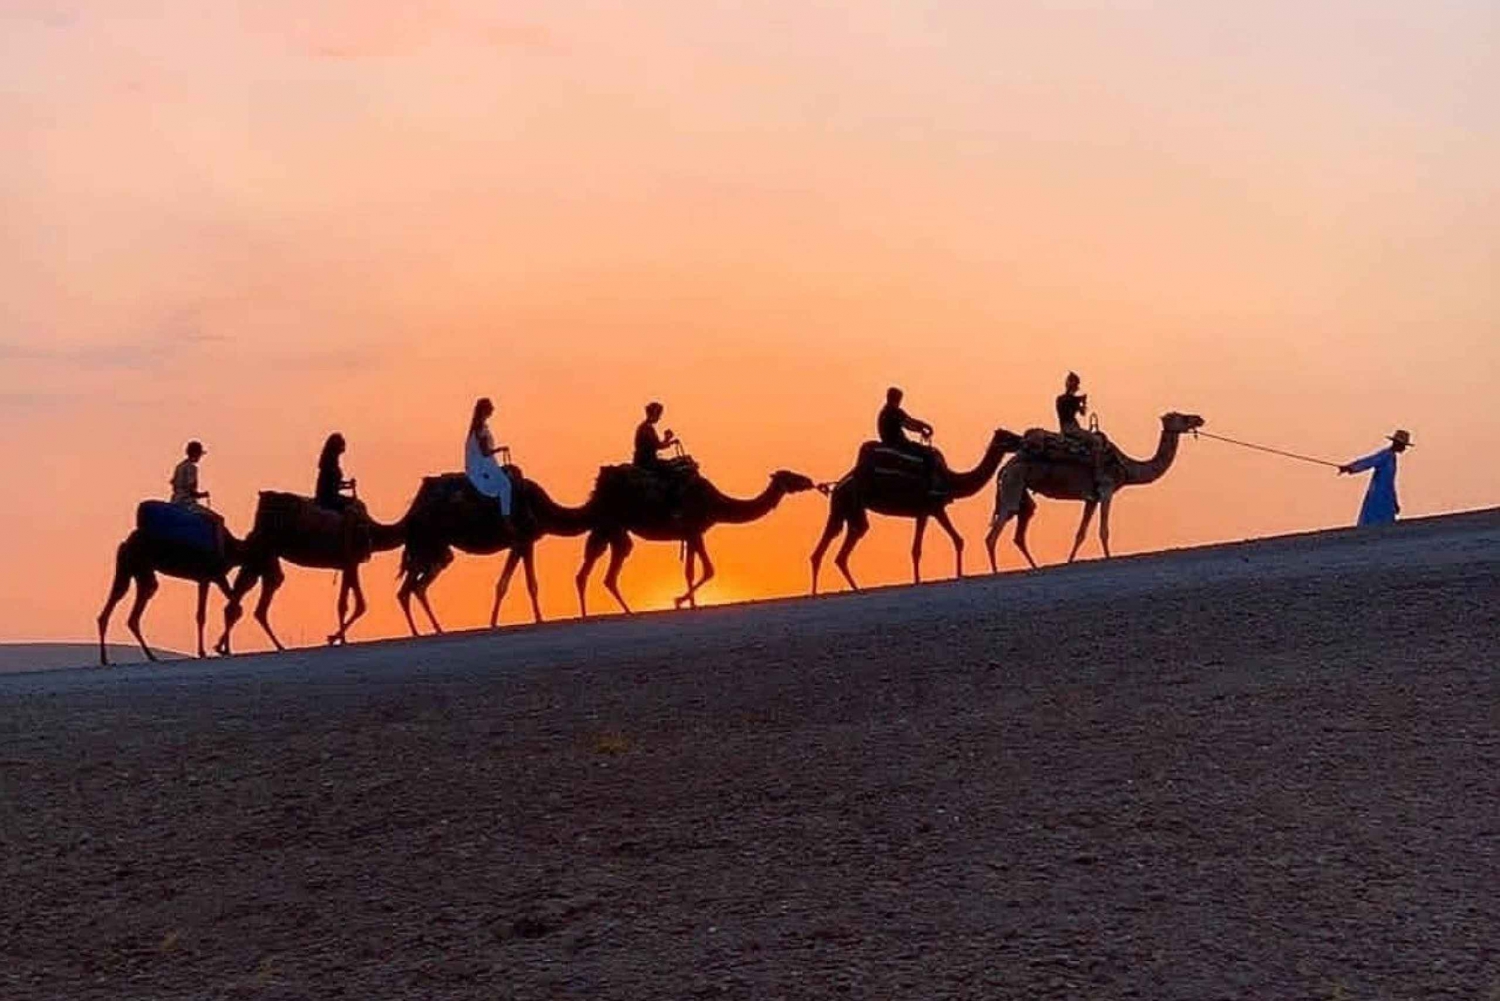 Woestijn Agafay diner in Nomadenkamp en kamelentocht